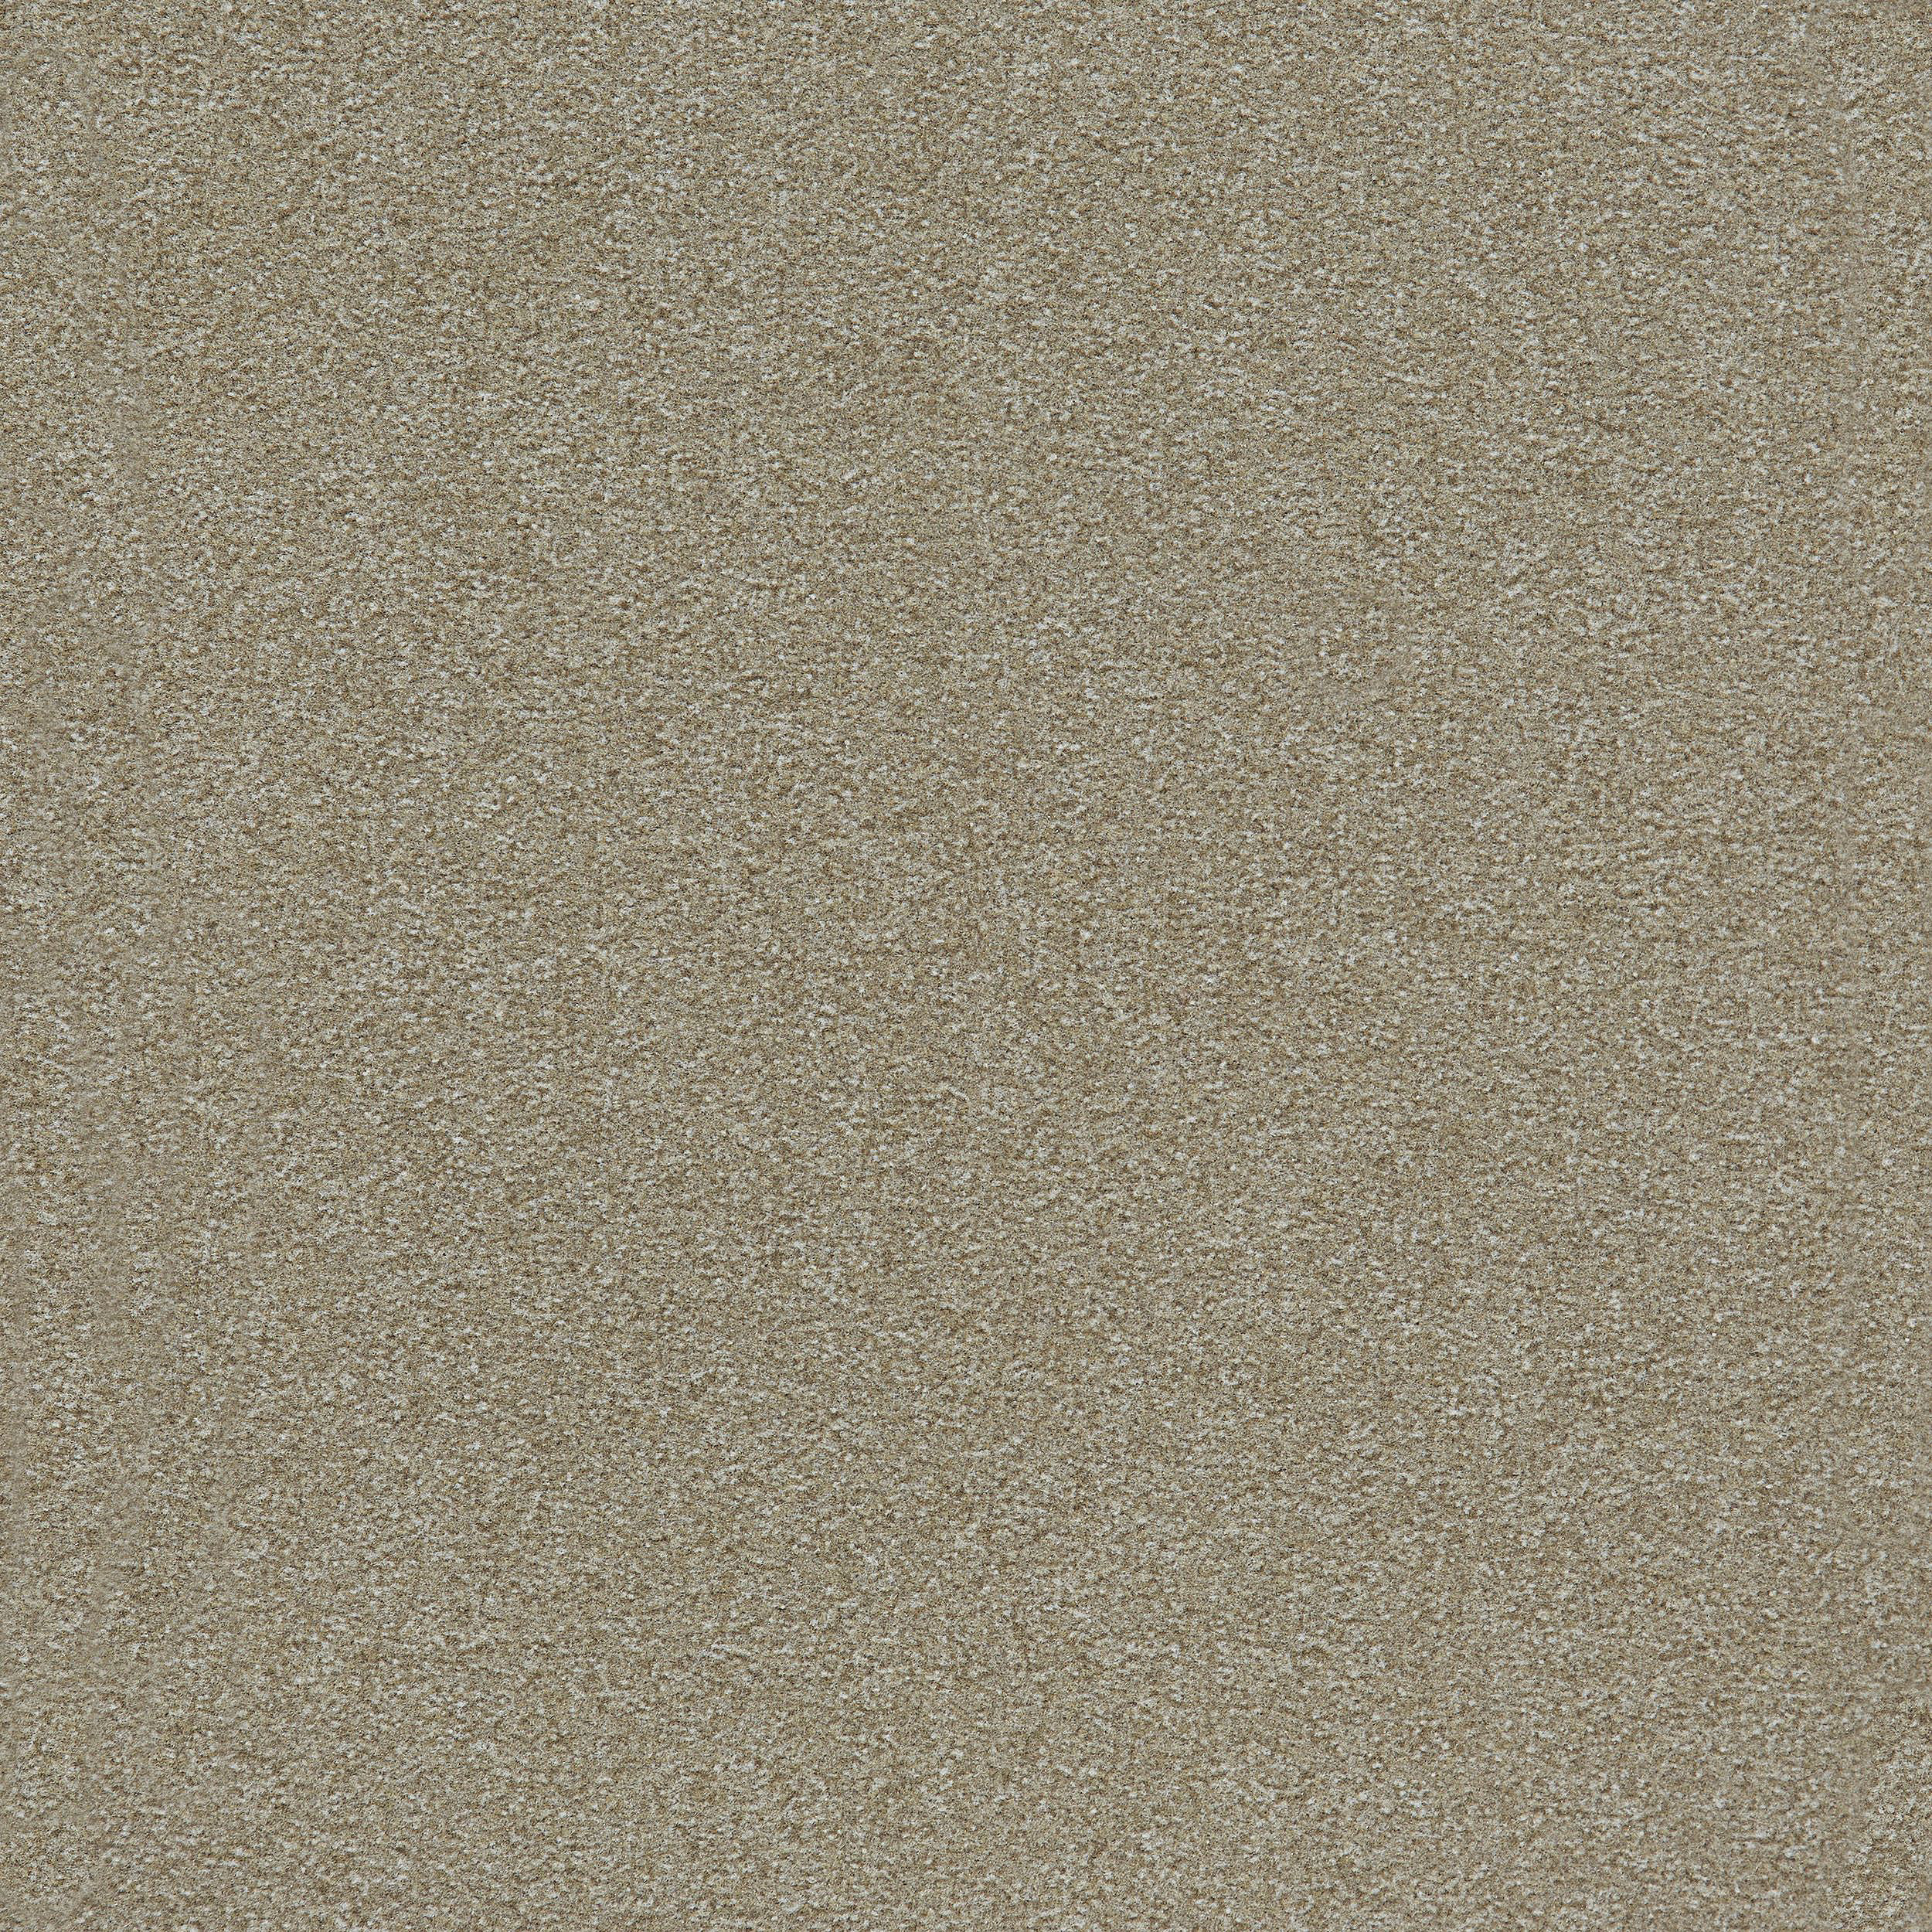 Heuga 725 Carpet Tile In Oyster afbeeldingnummer 10